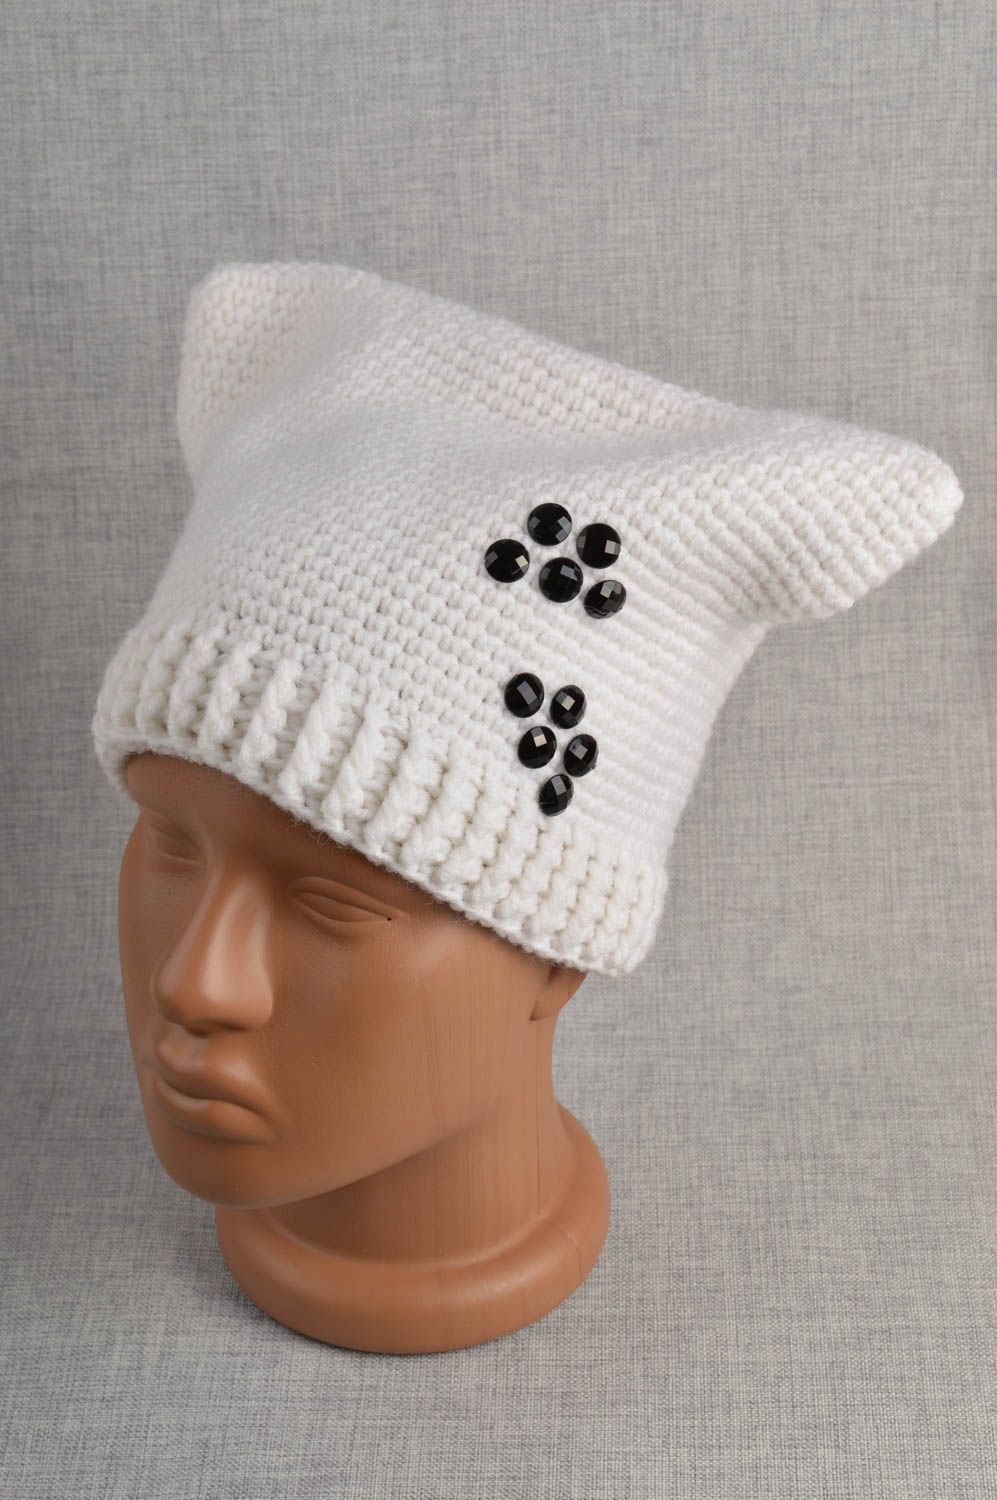 Unusual handmade crochet hat warm winter hat head accessories for kids photo 1